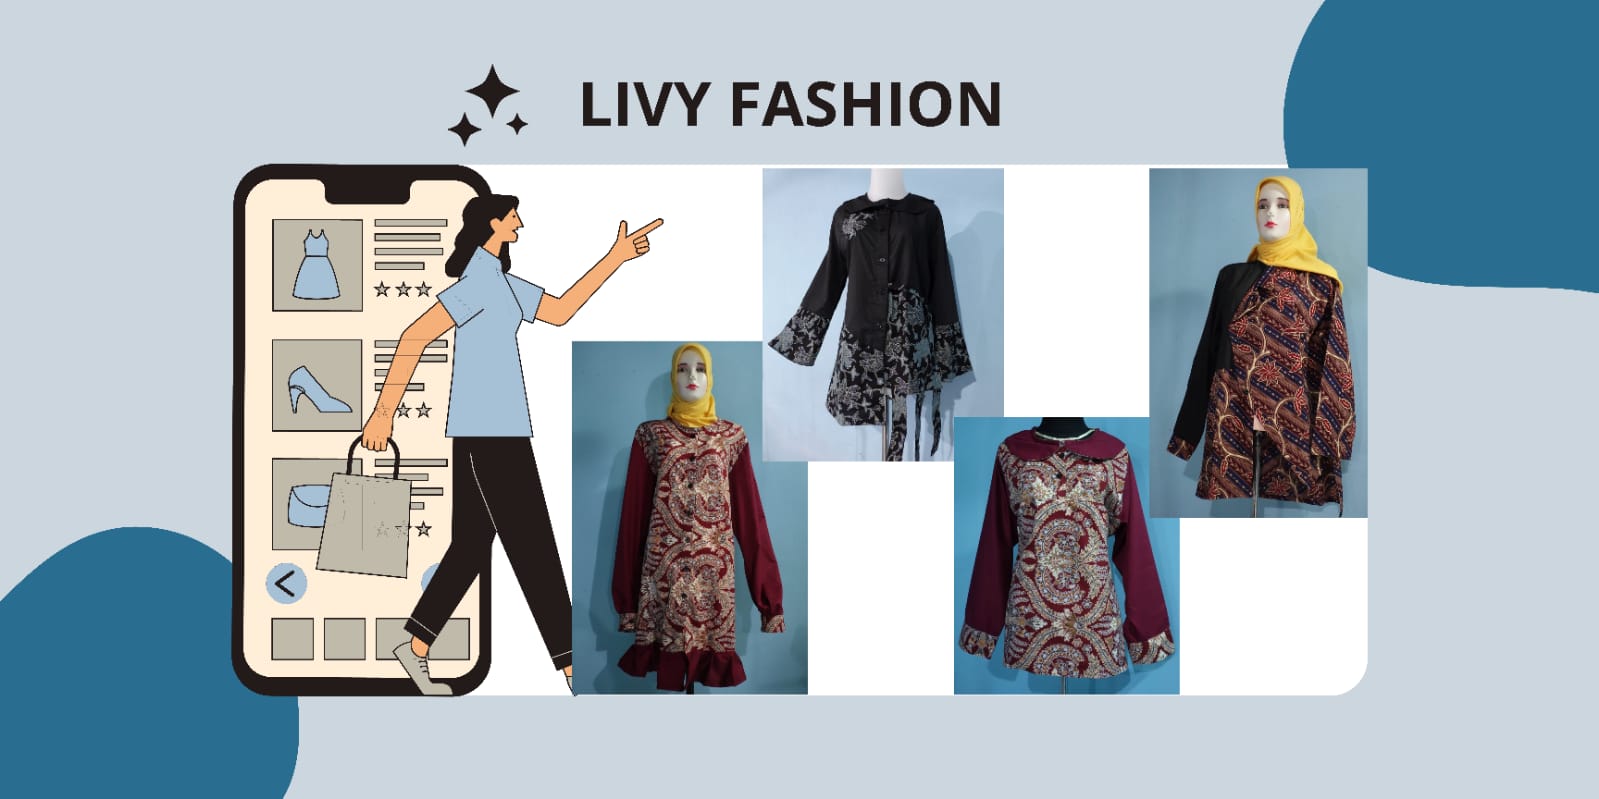 Livy Fashion